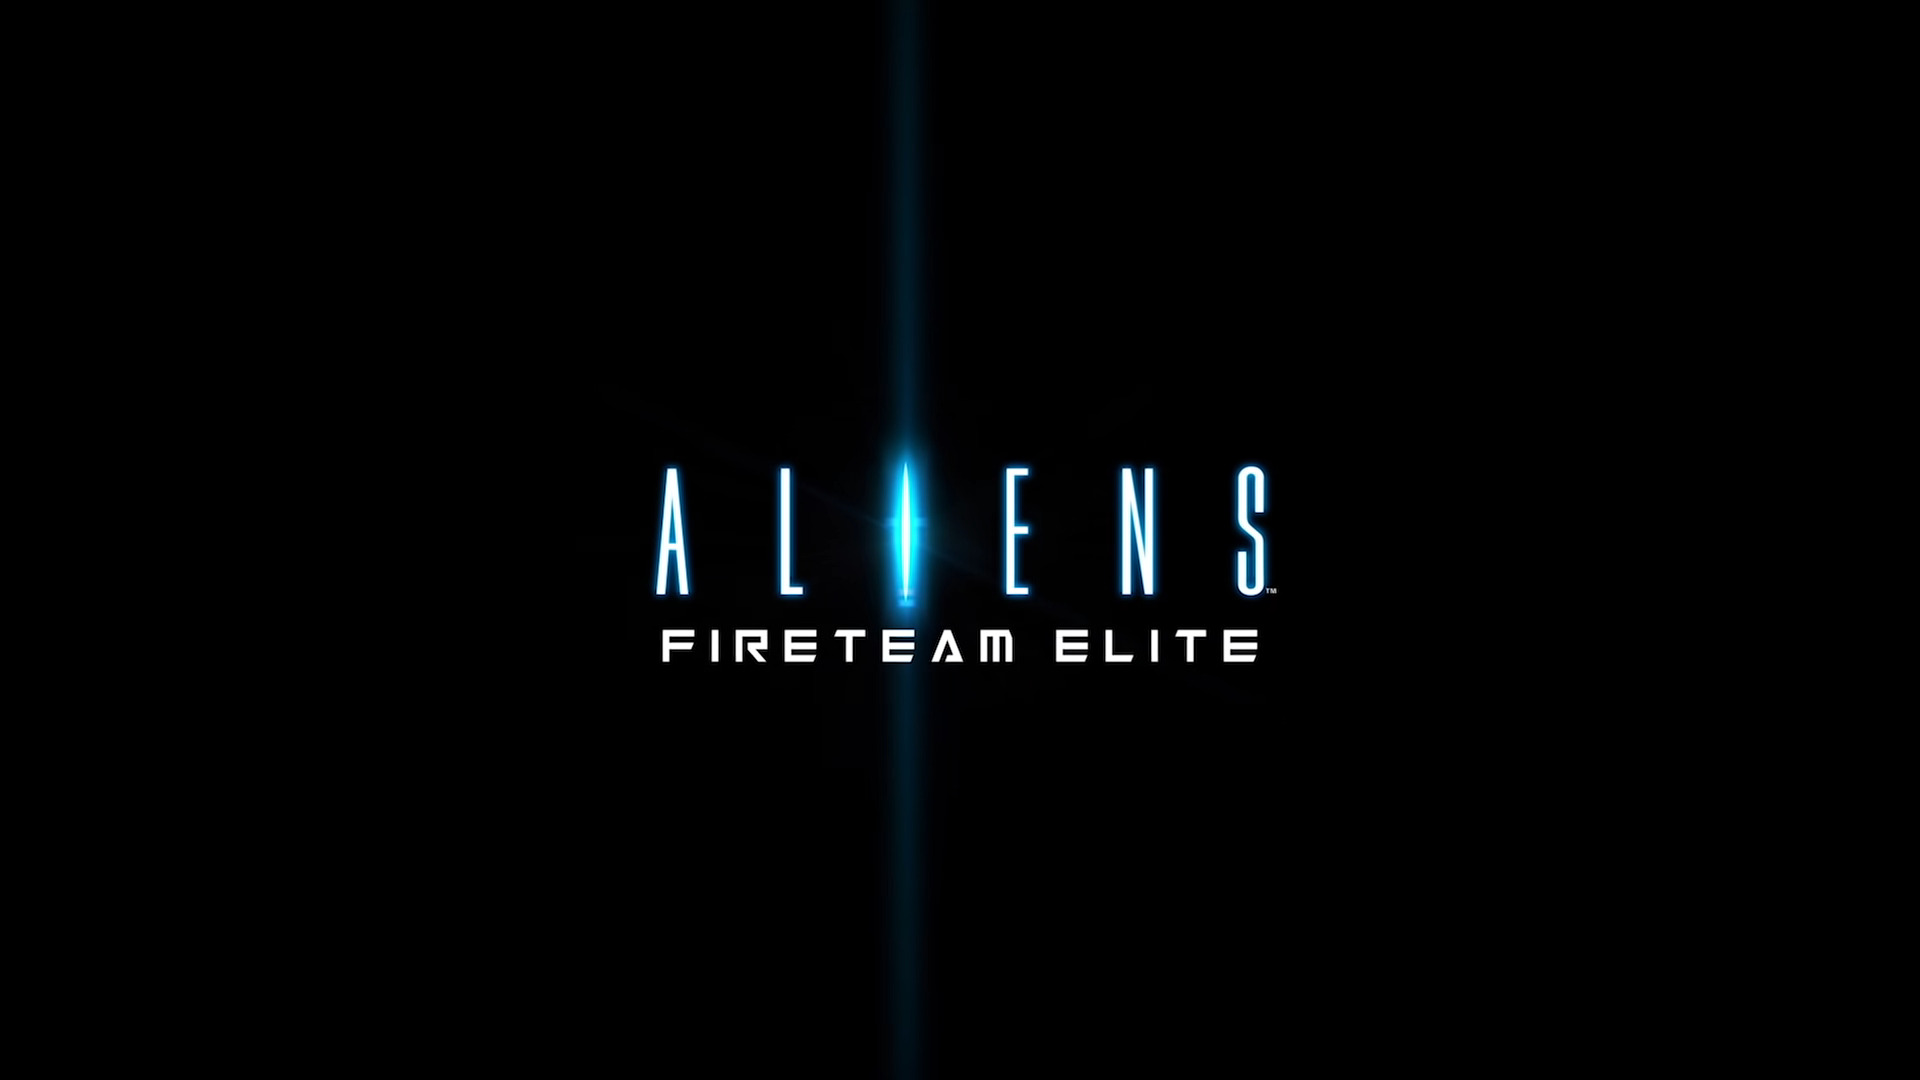 New Aliens Fireteam Elite HD Wallpapers